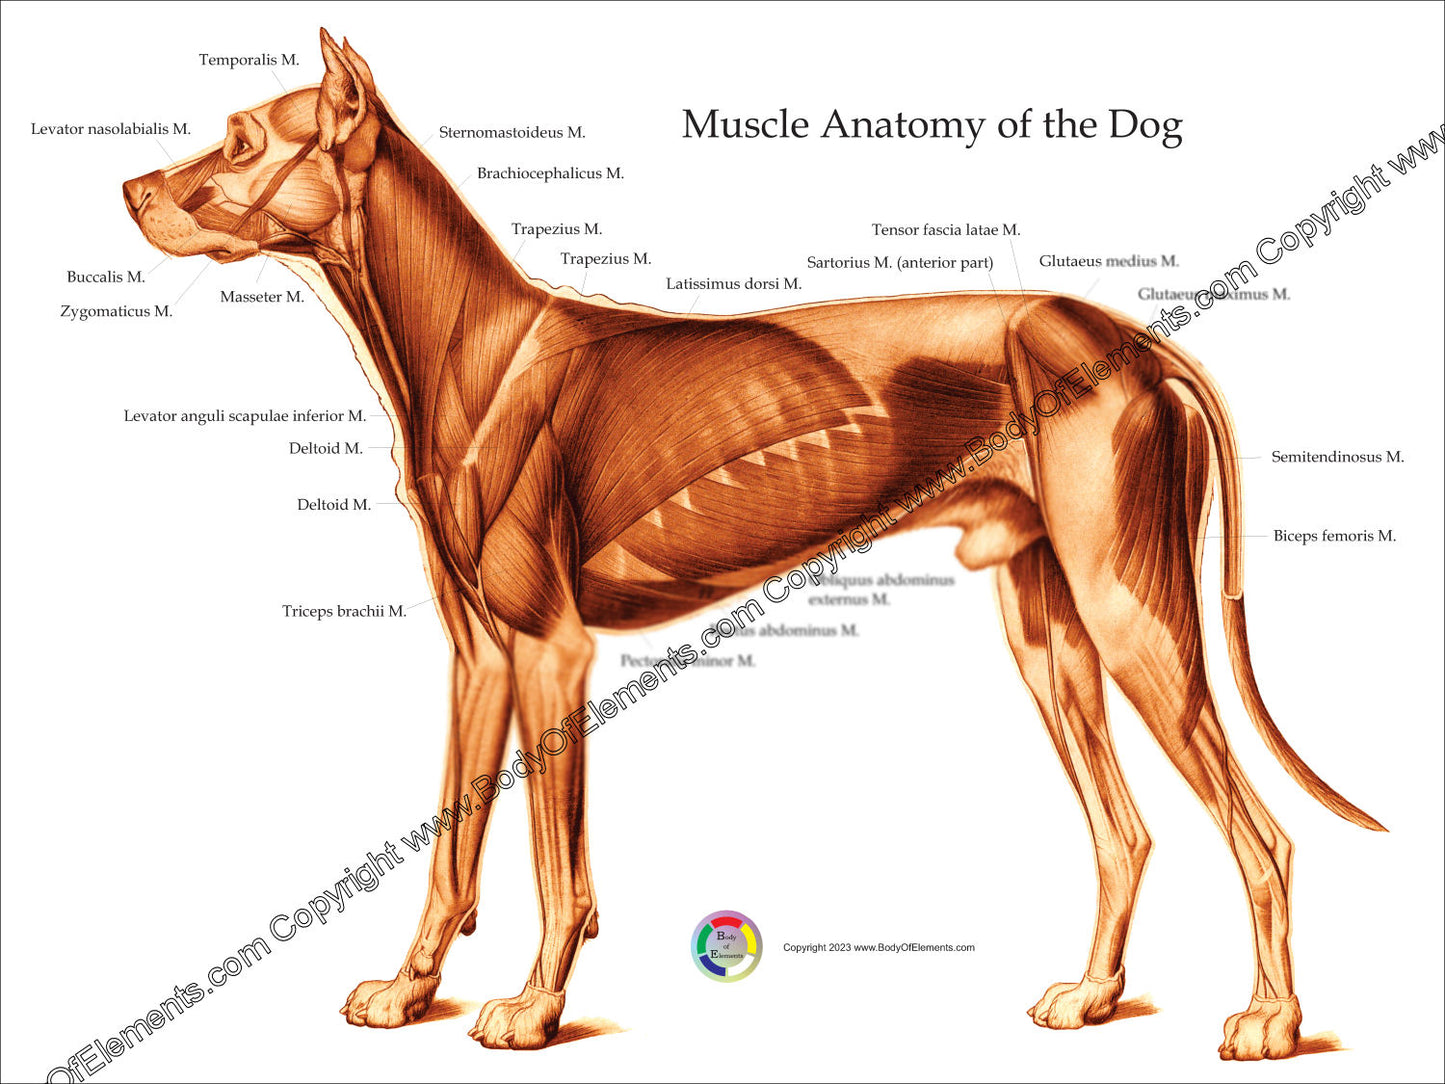 Dog muscular anatomy poster